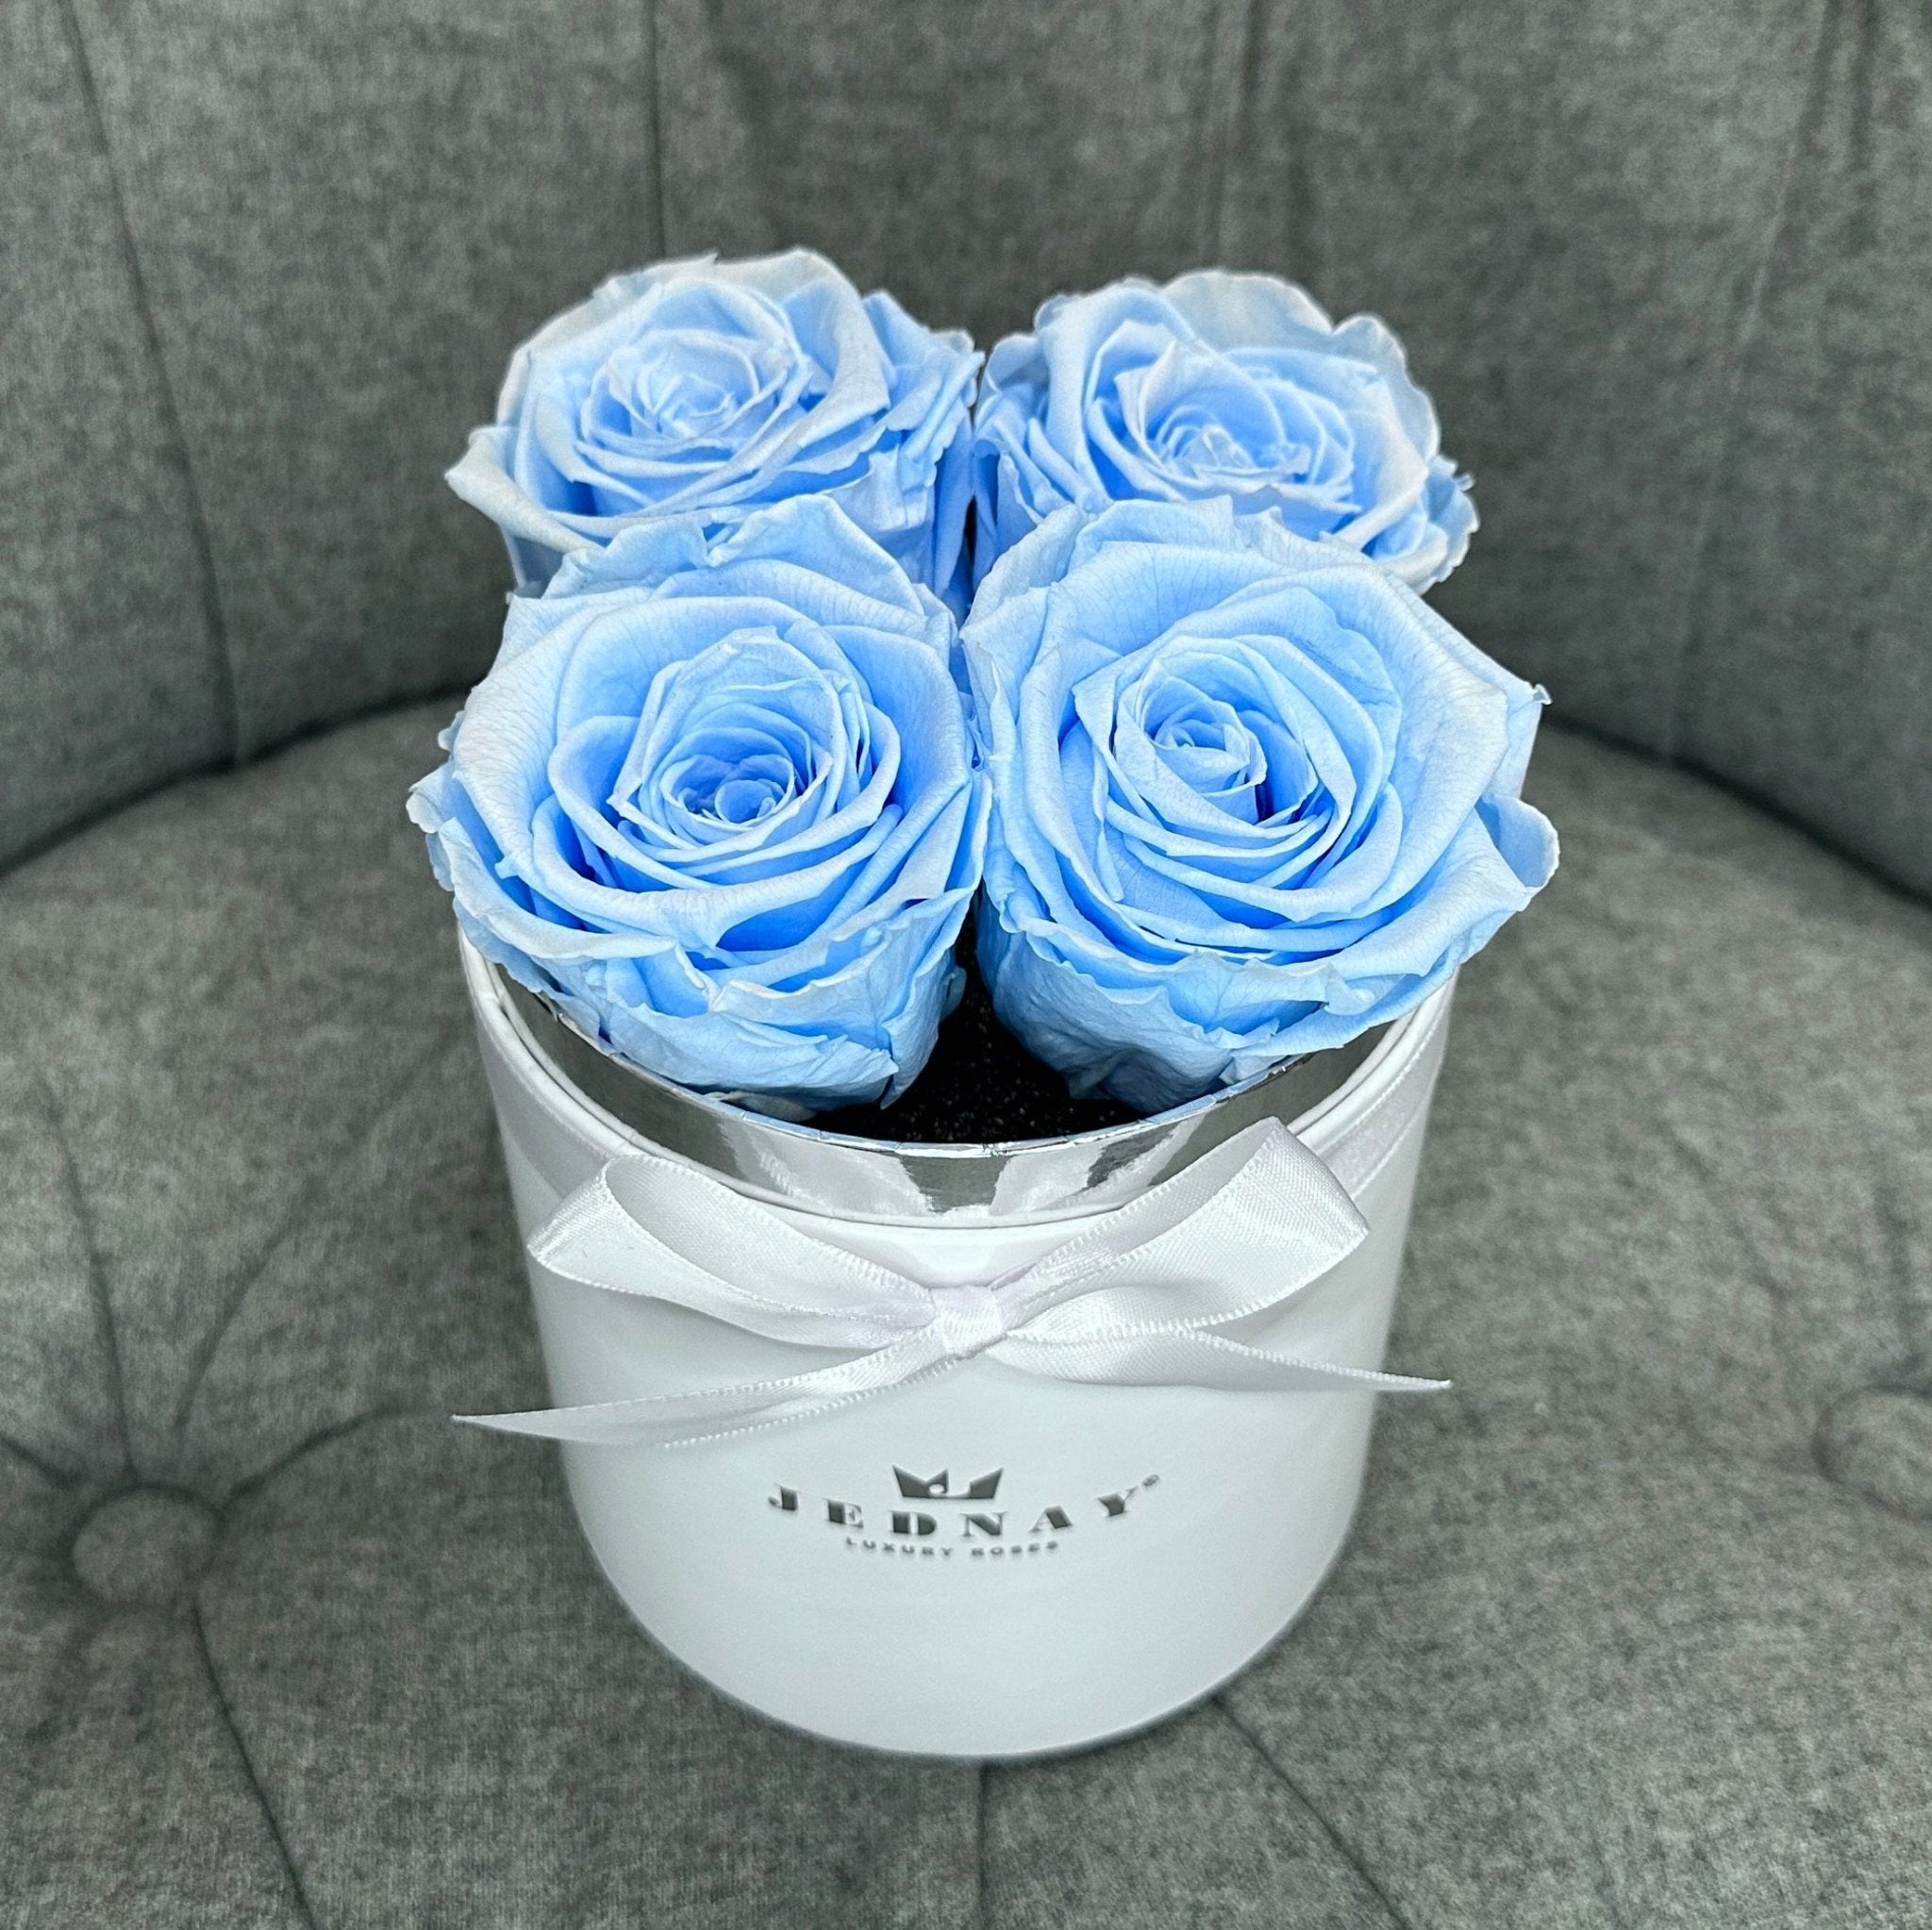 Petite Classic White Forever Rose Box - Sky Blue Eternal Roses - Jednay Roses